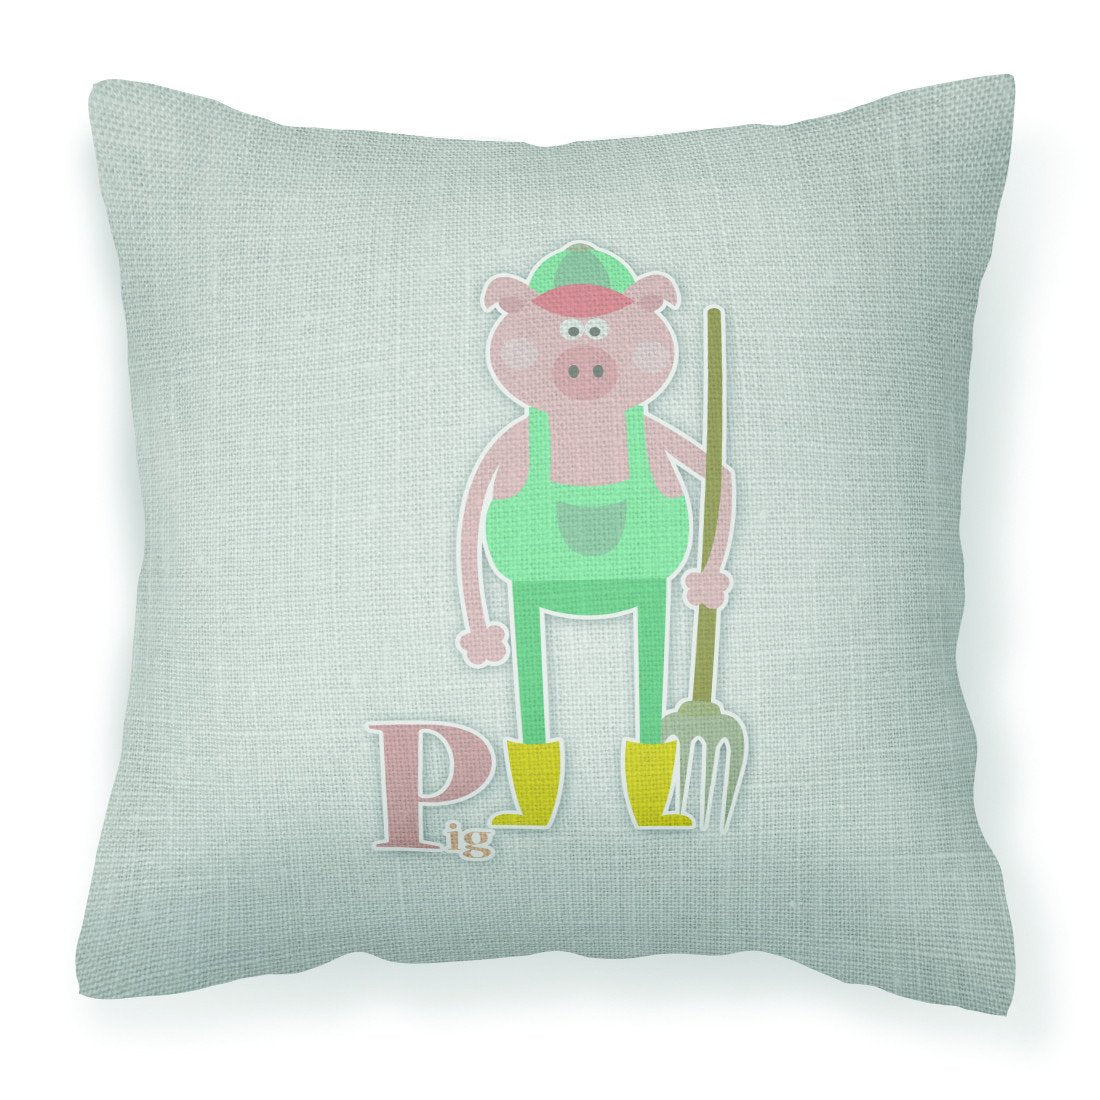 Alphabet P for Pig Fabric Decorative Pillow BB5741PW1818 by Caroline's Treasures